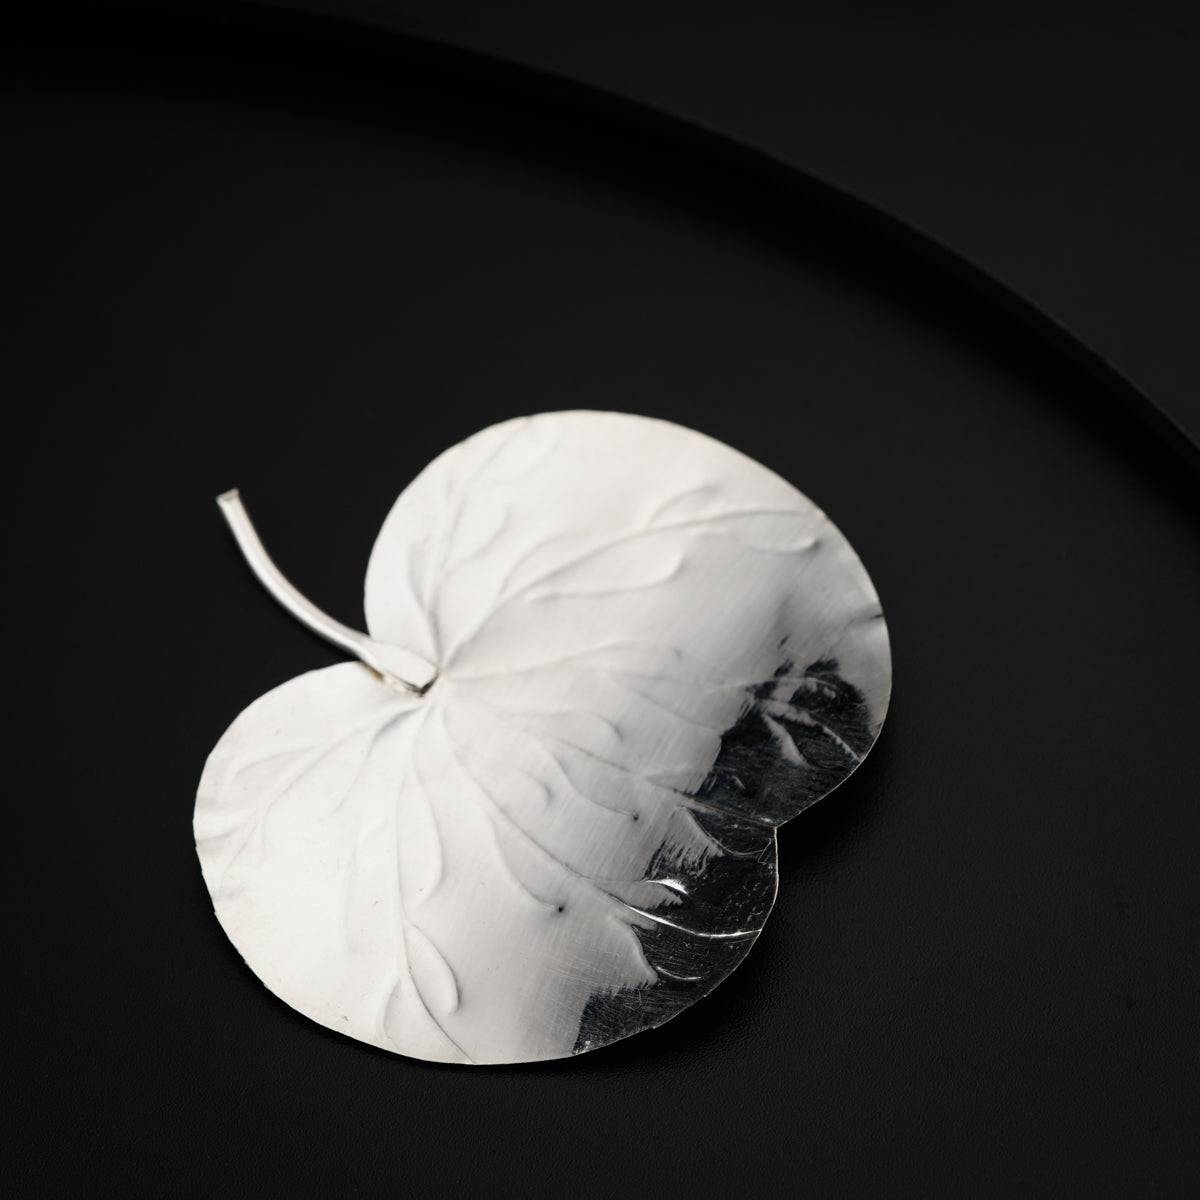 a white leaf shaped object on a black surface